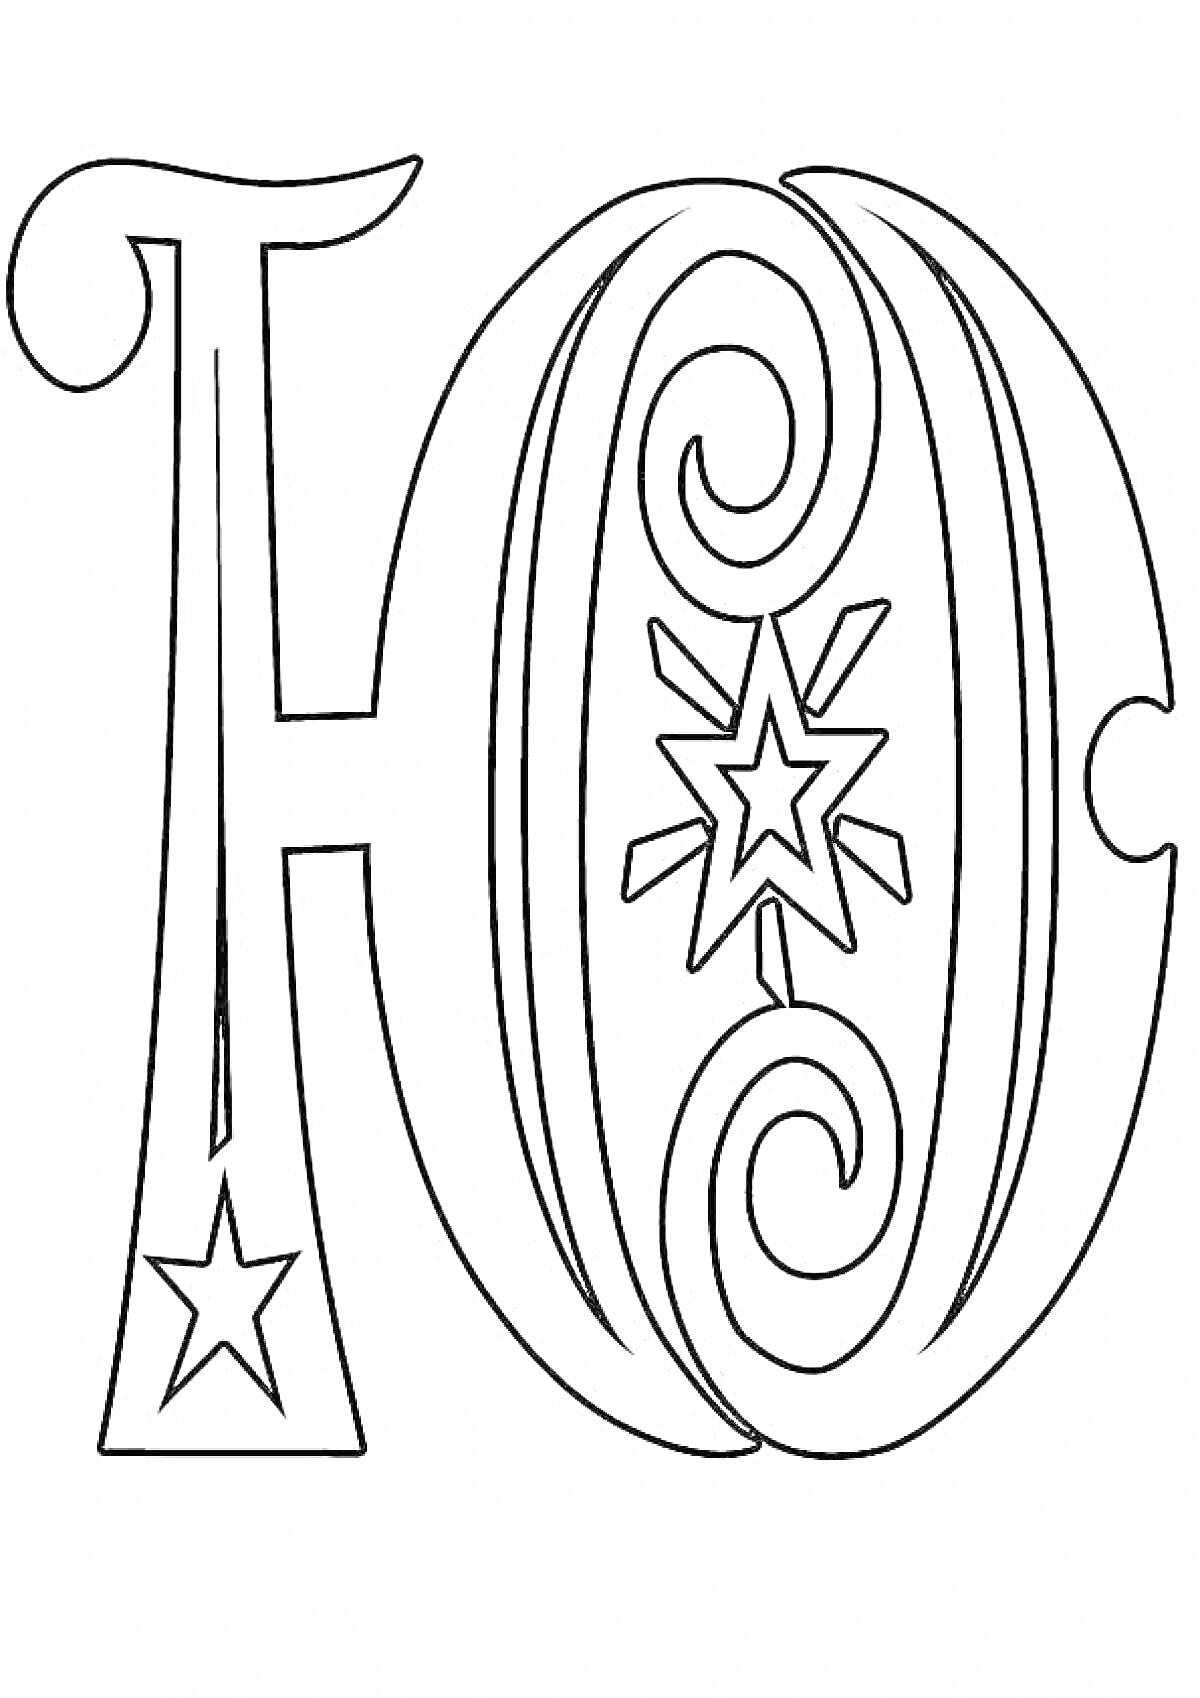 Раскраска Буква Ю со звездами и завитками